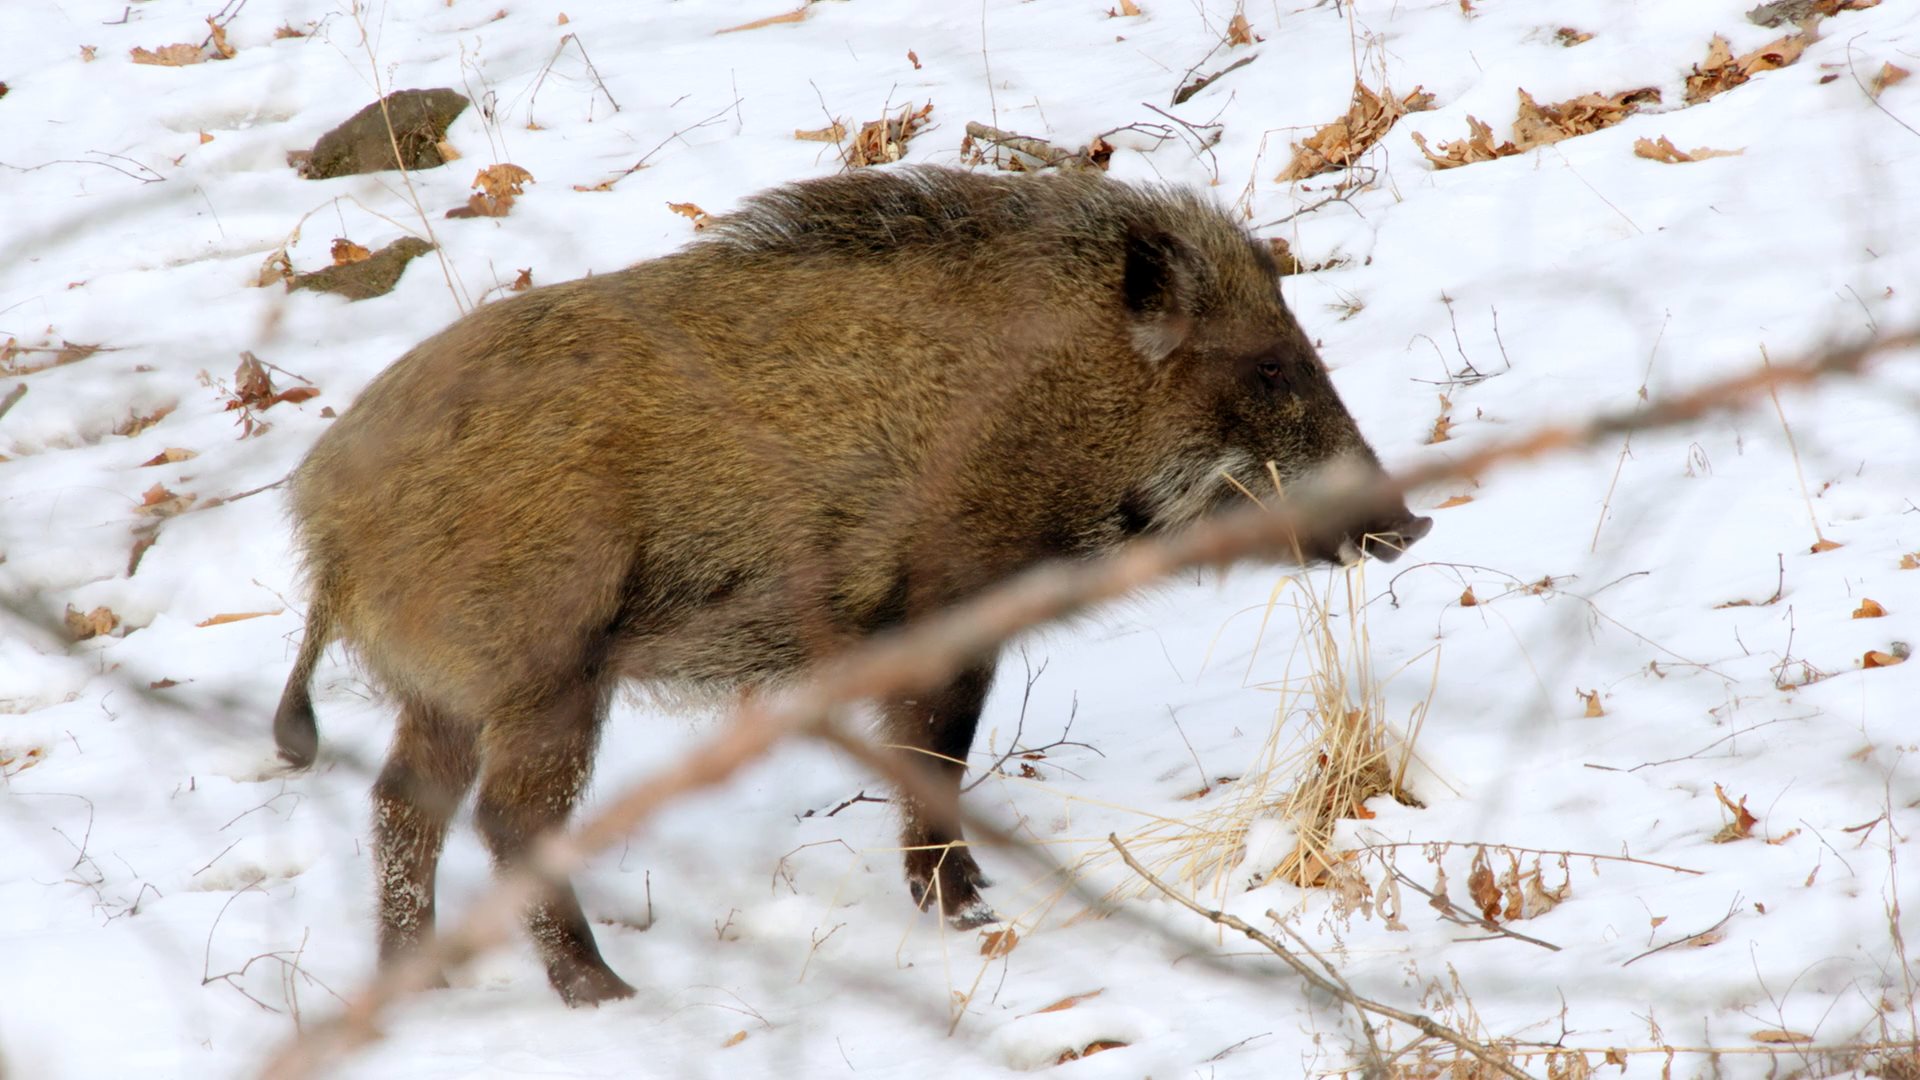 Video of wild boar moving in between snowy trees